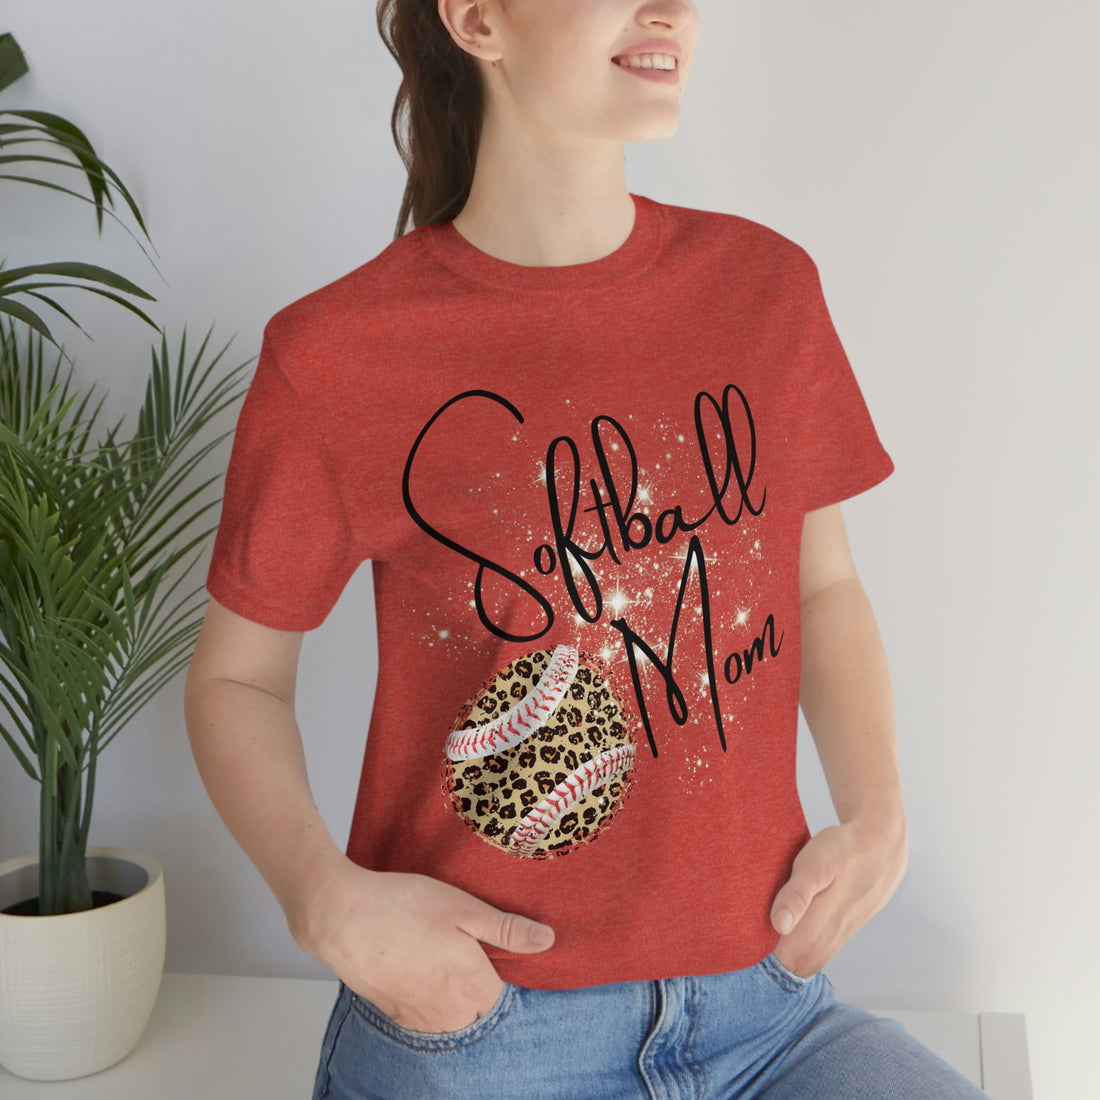 Softball MOM - T-Shirt - Positively Sassy - Softball MOM